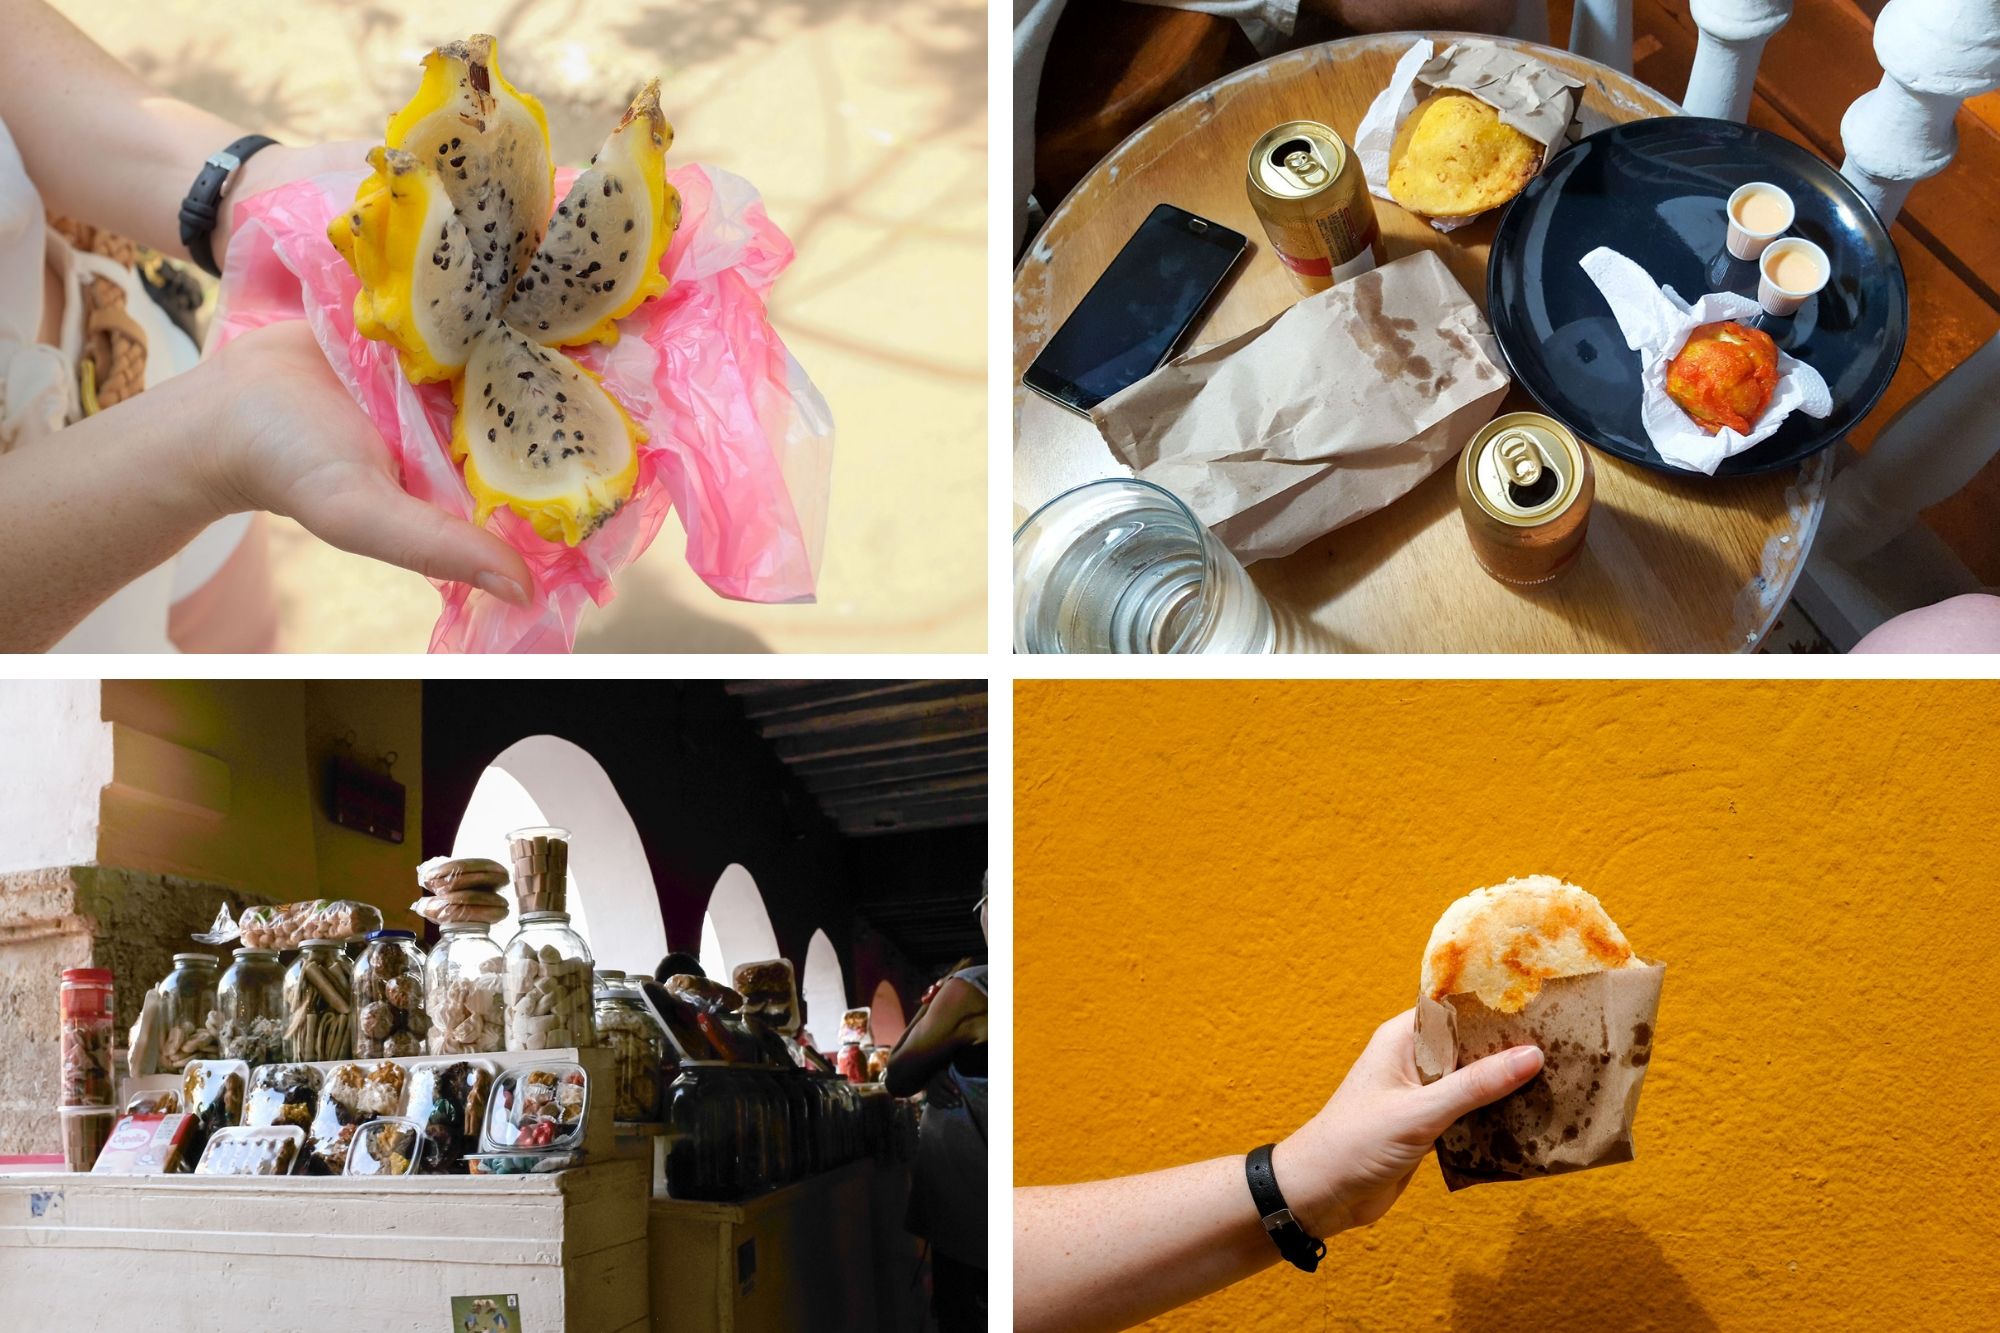 Collage of Street Food in Cartagena: Pitaya, Fritas, candies, and an arepa